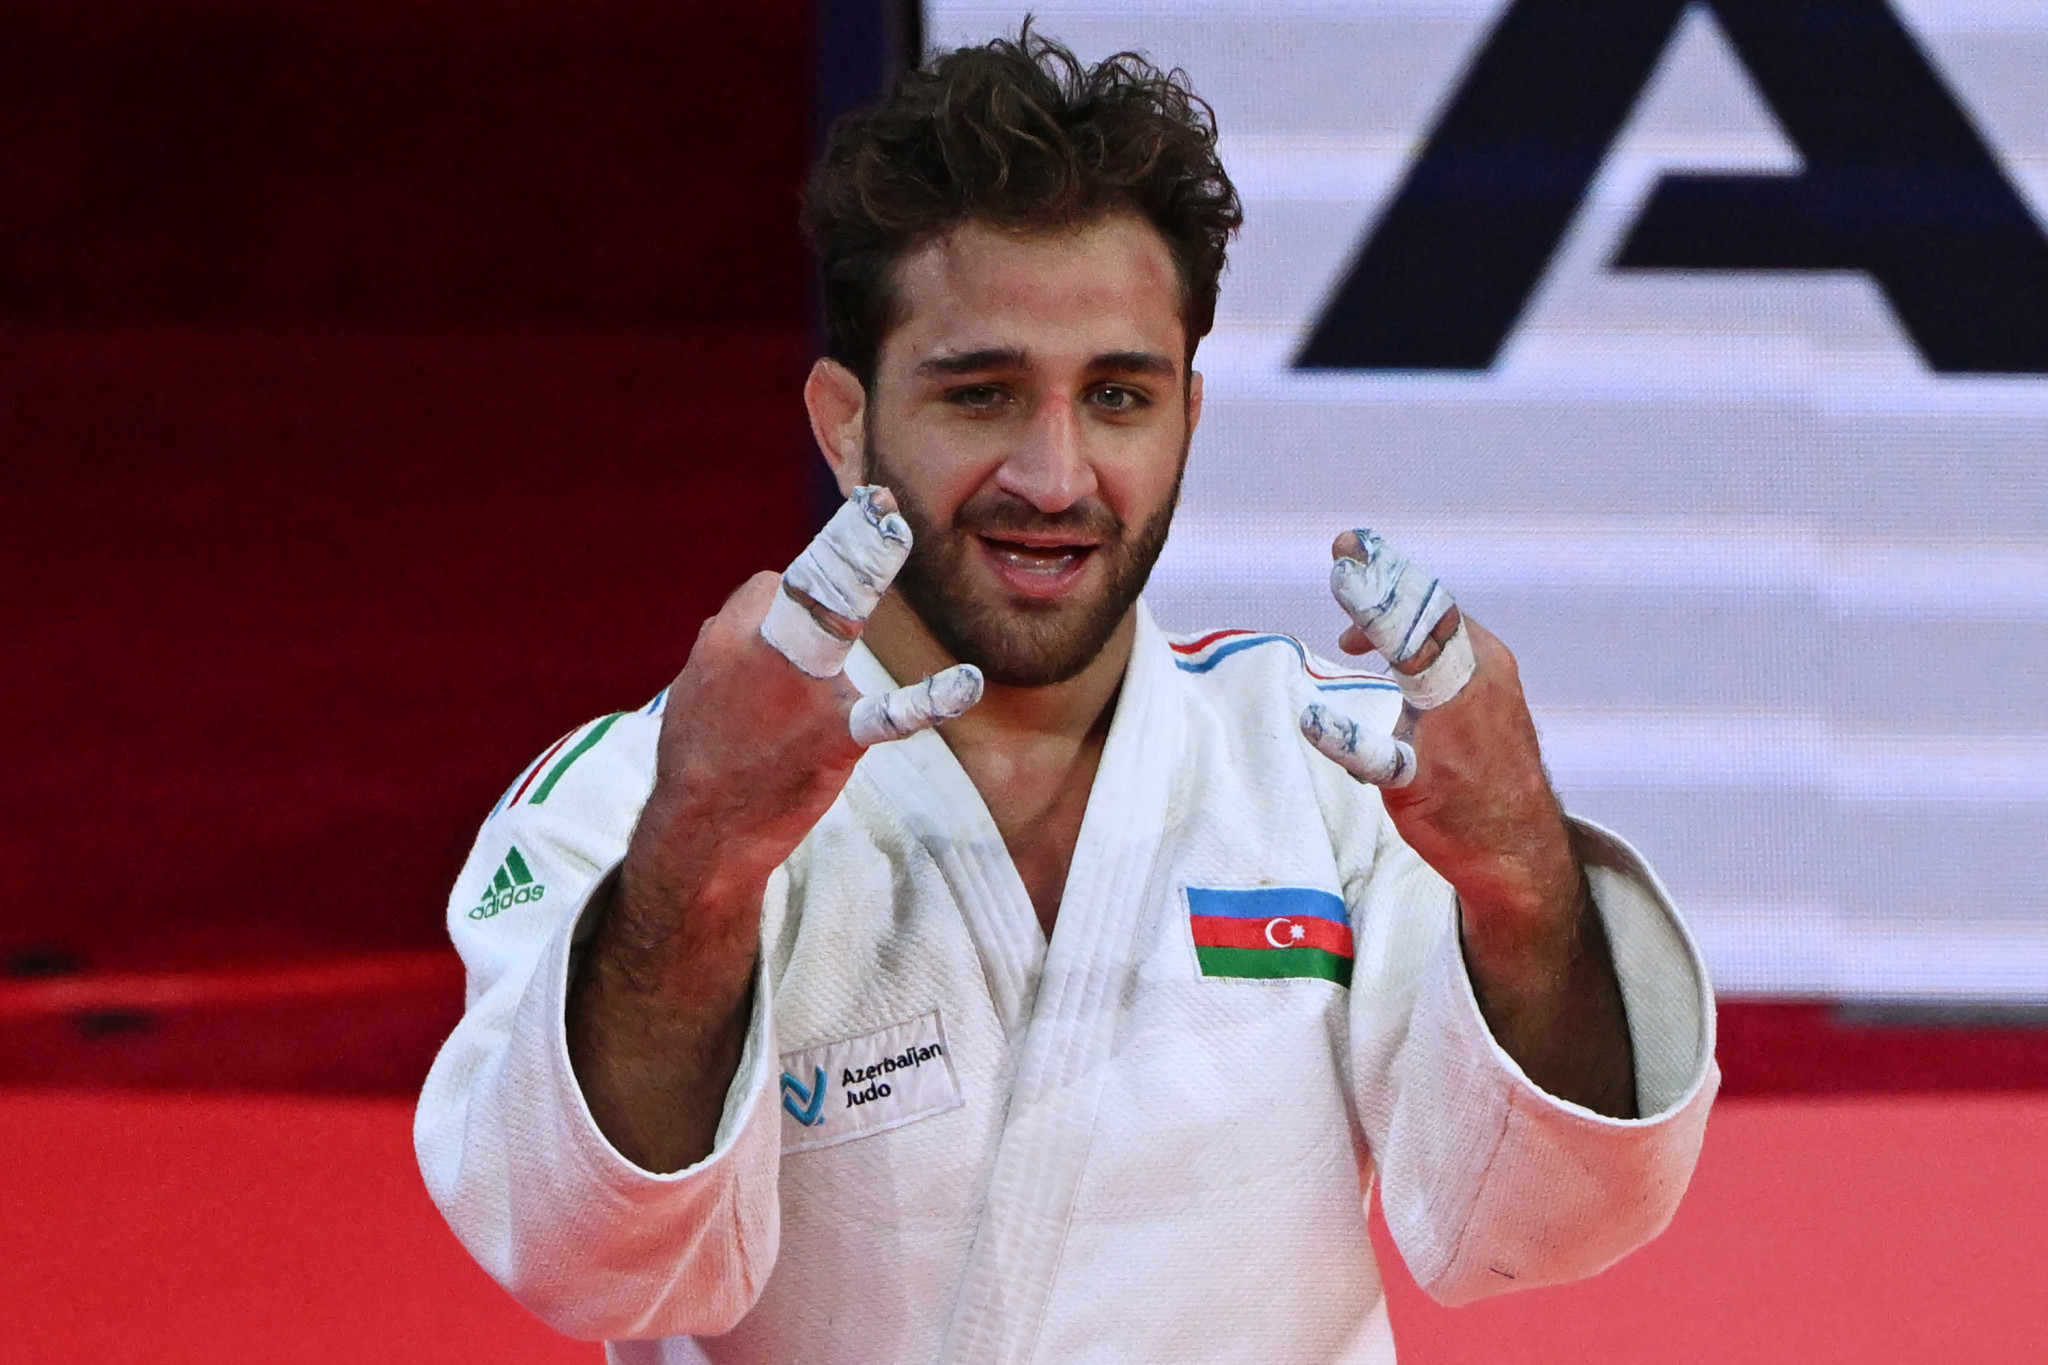 Hidayat Heydarov was victorious in the men's under-73kg final ©Getty Images